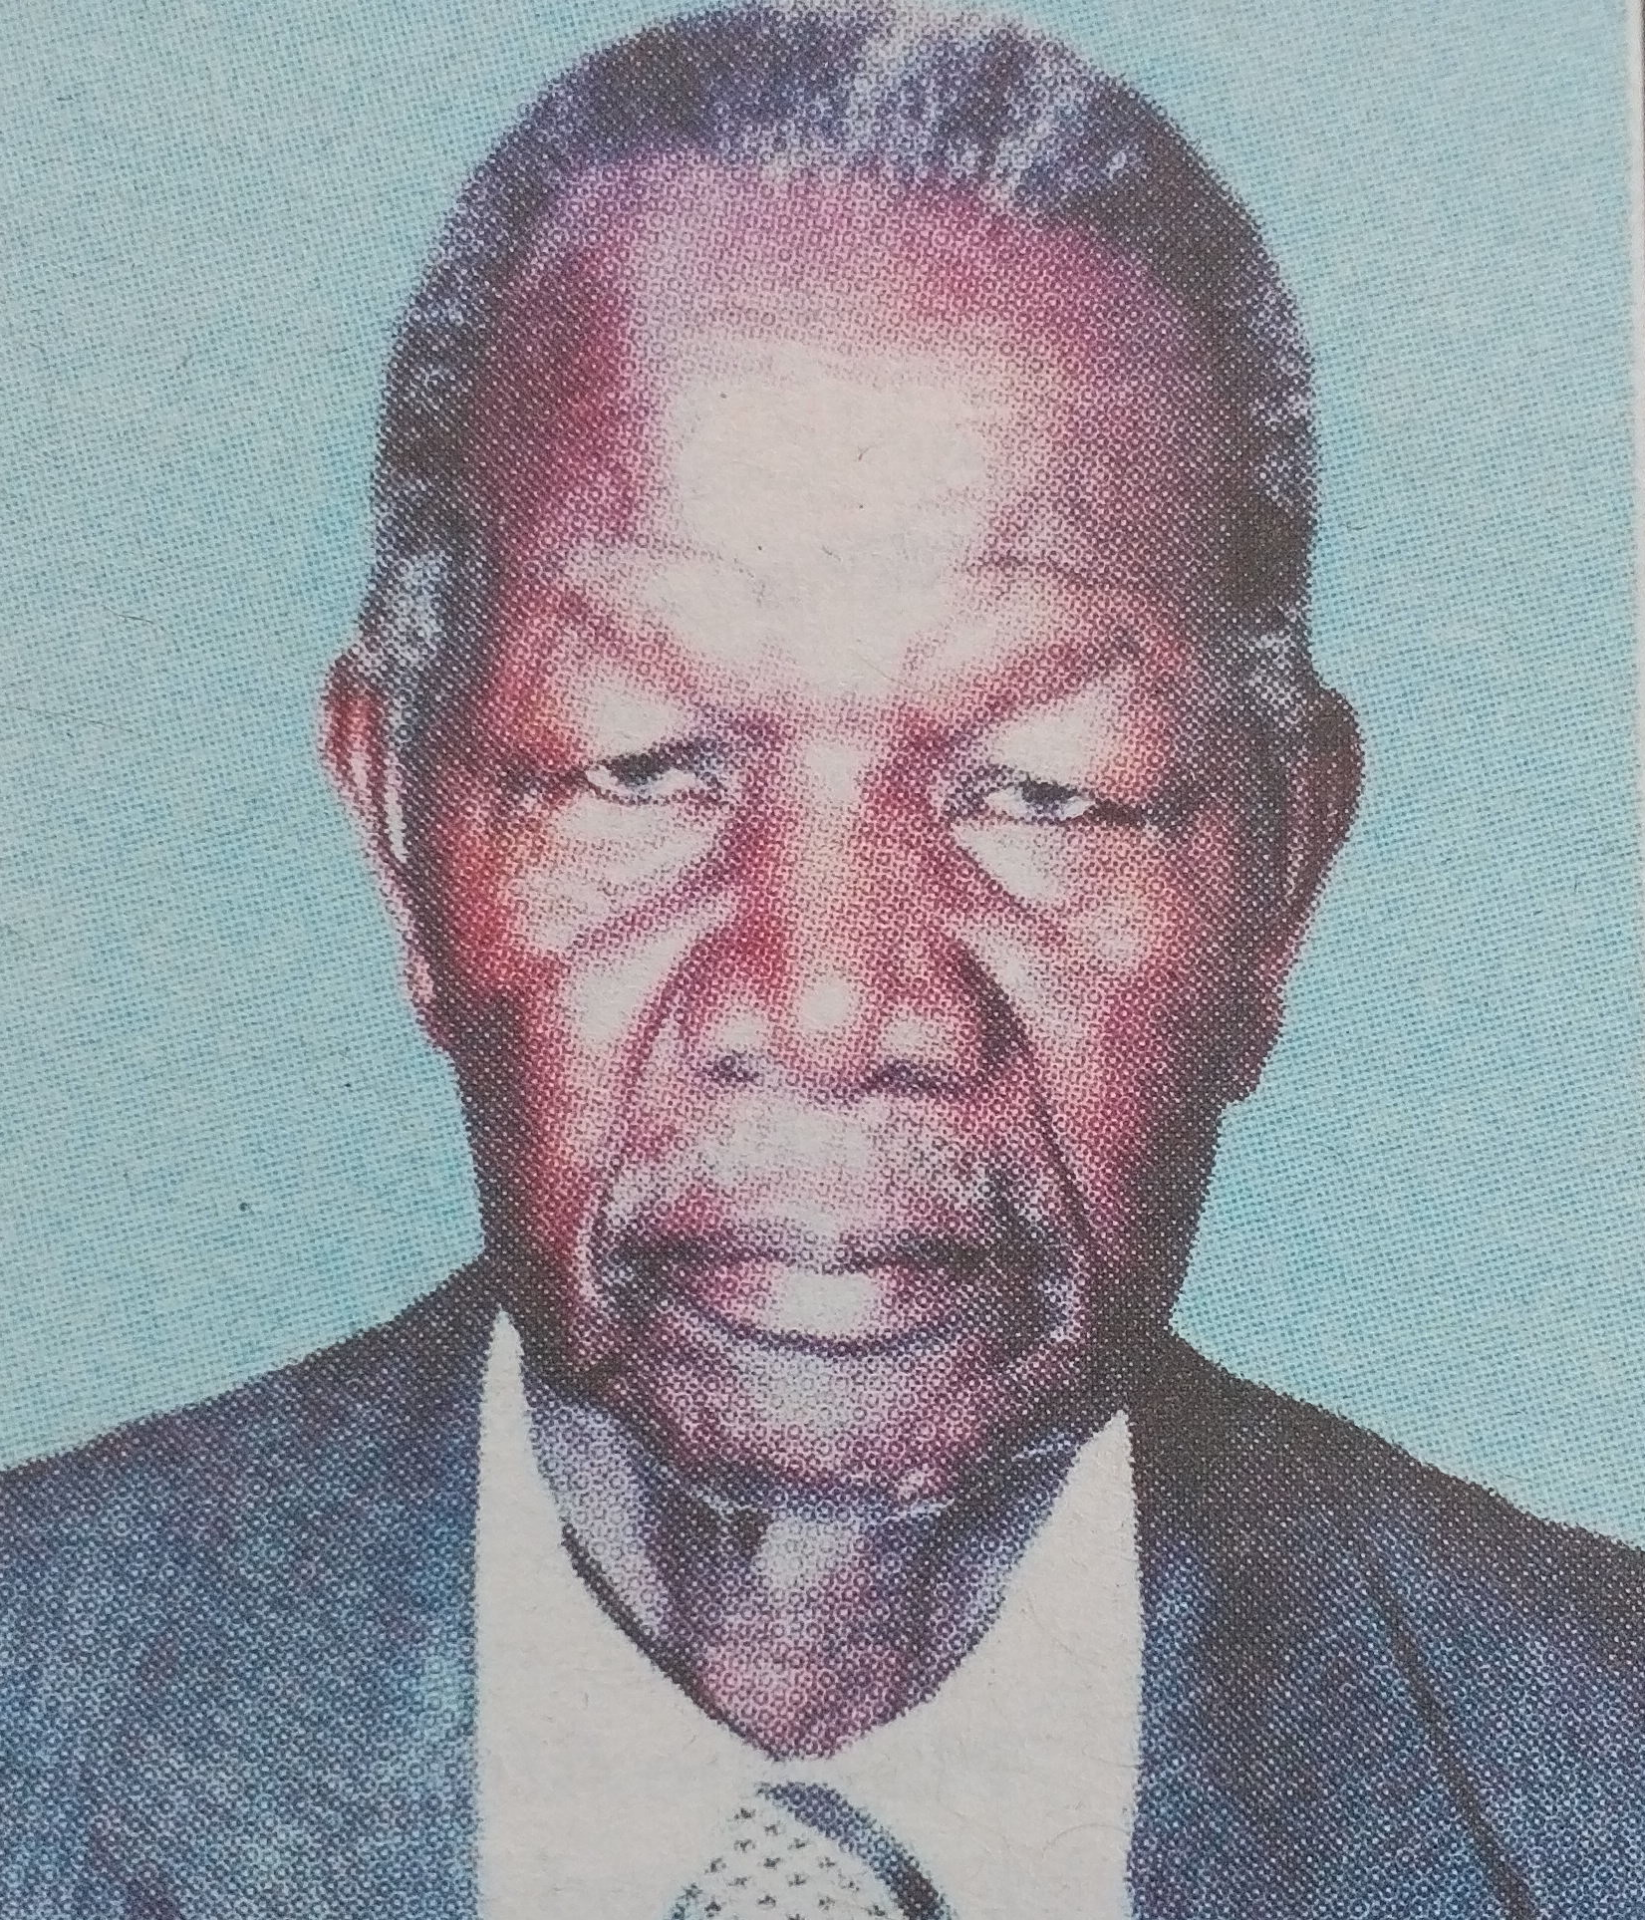 Obituary Image of Mzee Michael Aguda Oker